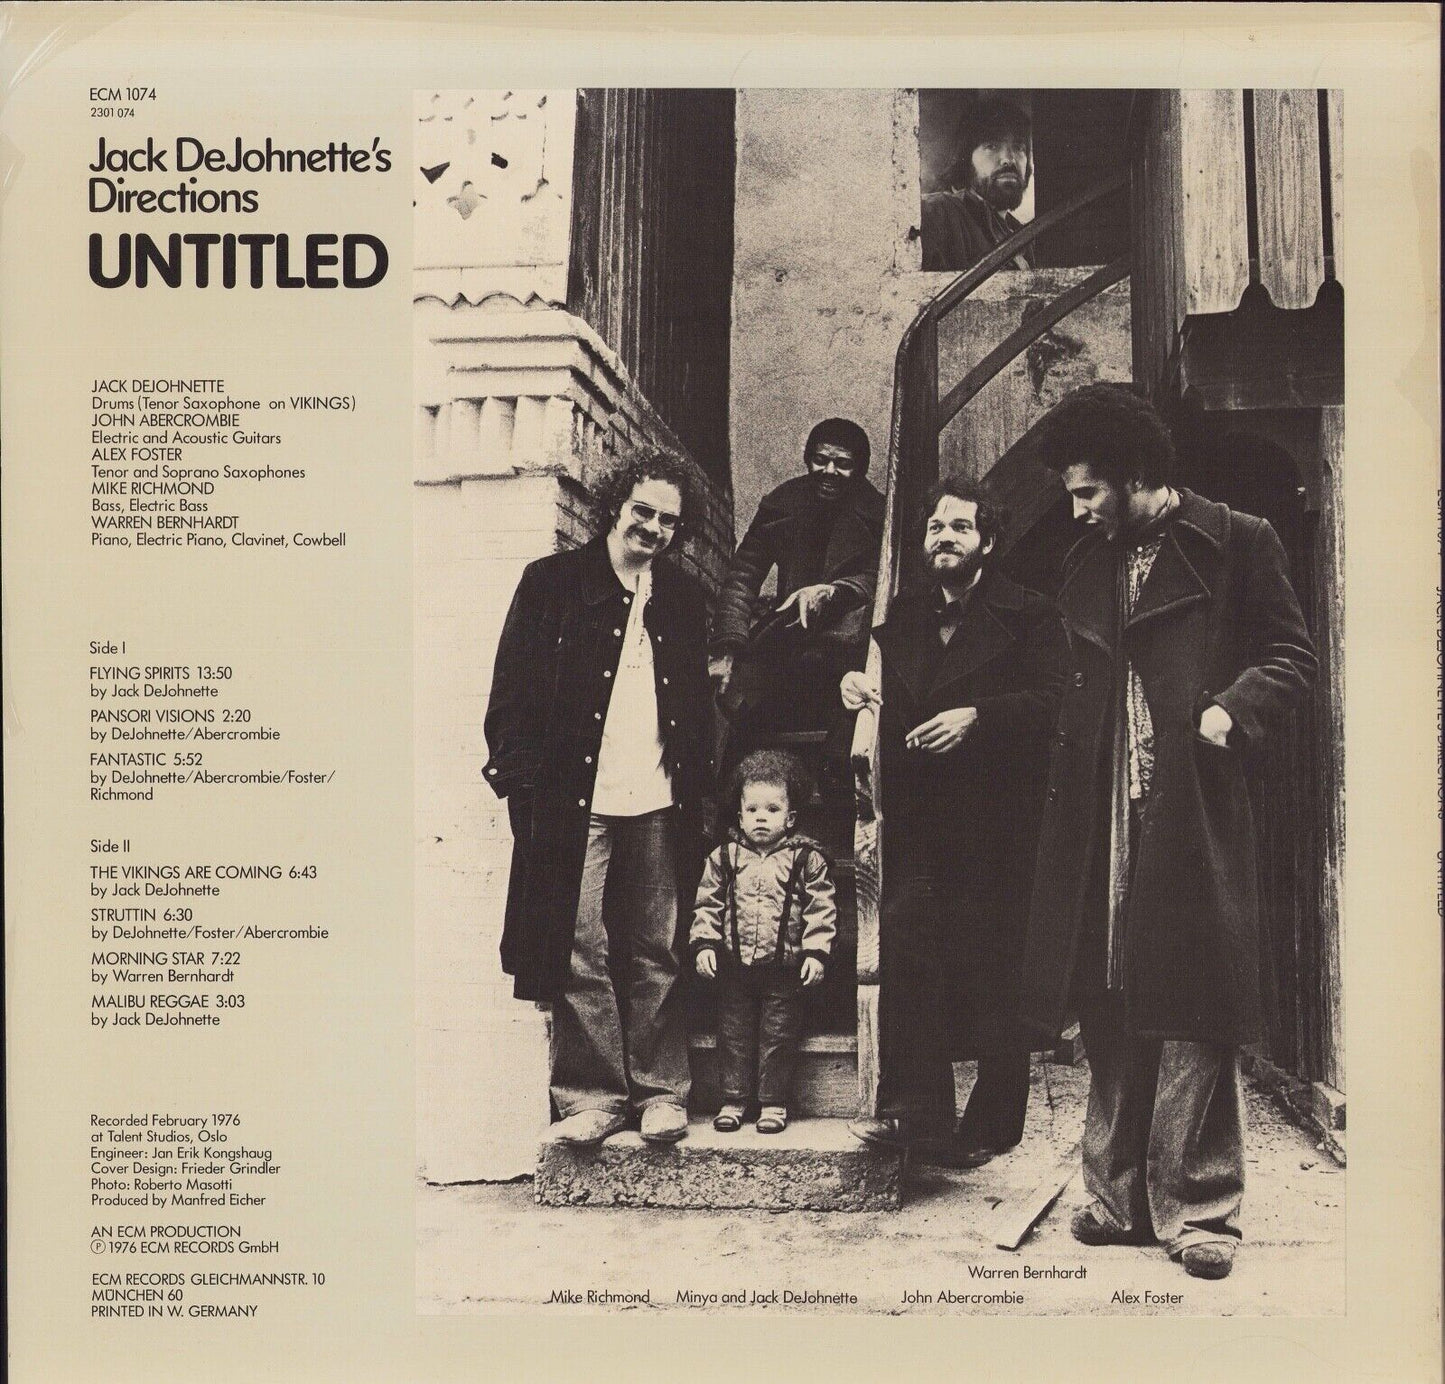 Jack DeJohnette's Directions ‎- Untitled Vinyl LP